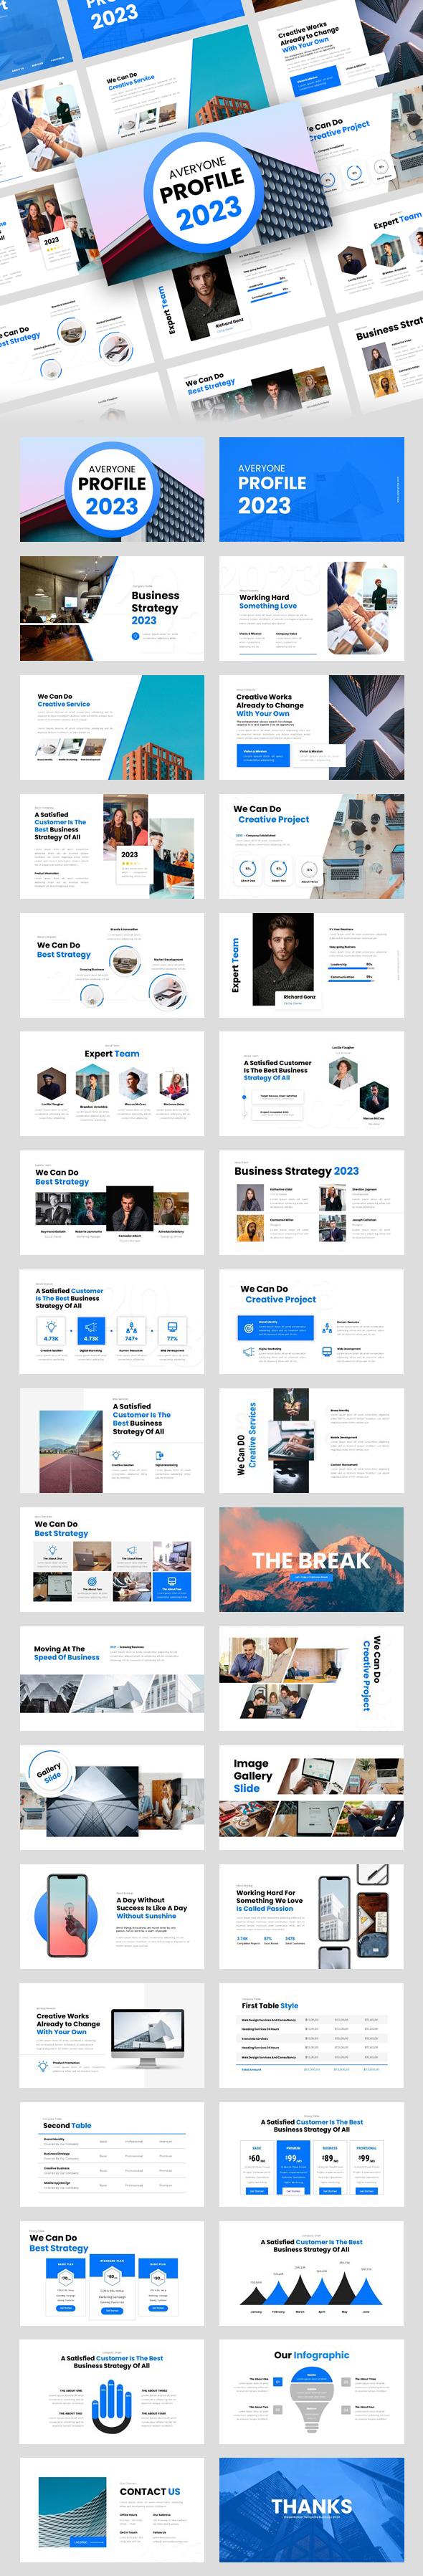 Averyone Profile 2023 - Business Strategy Google Slides Template